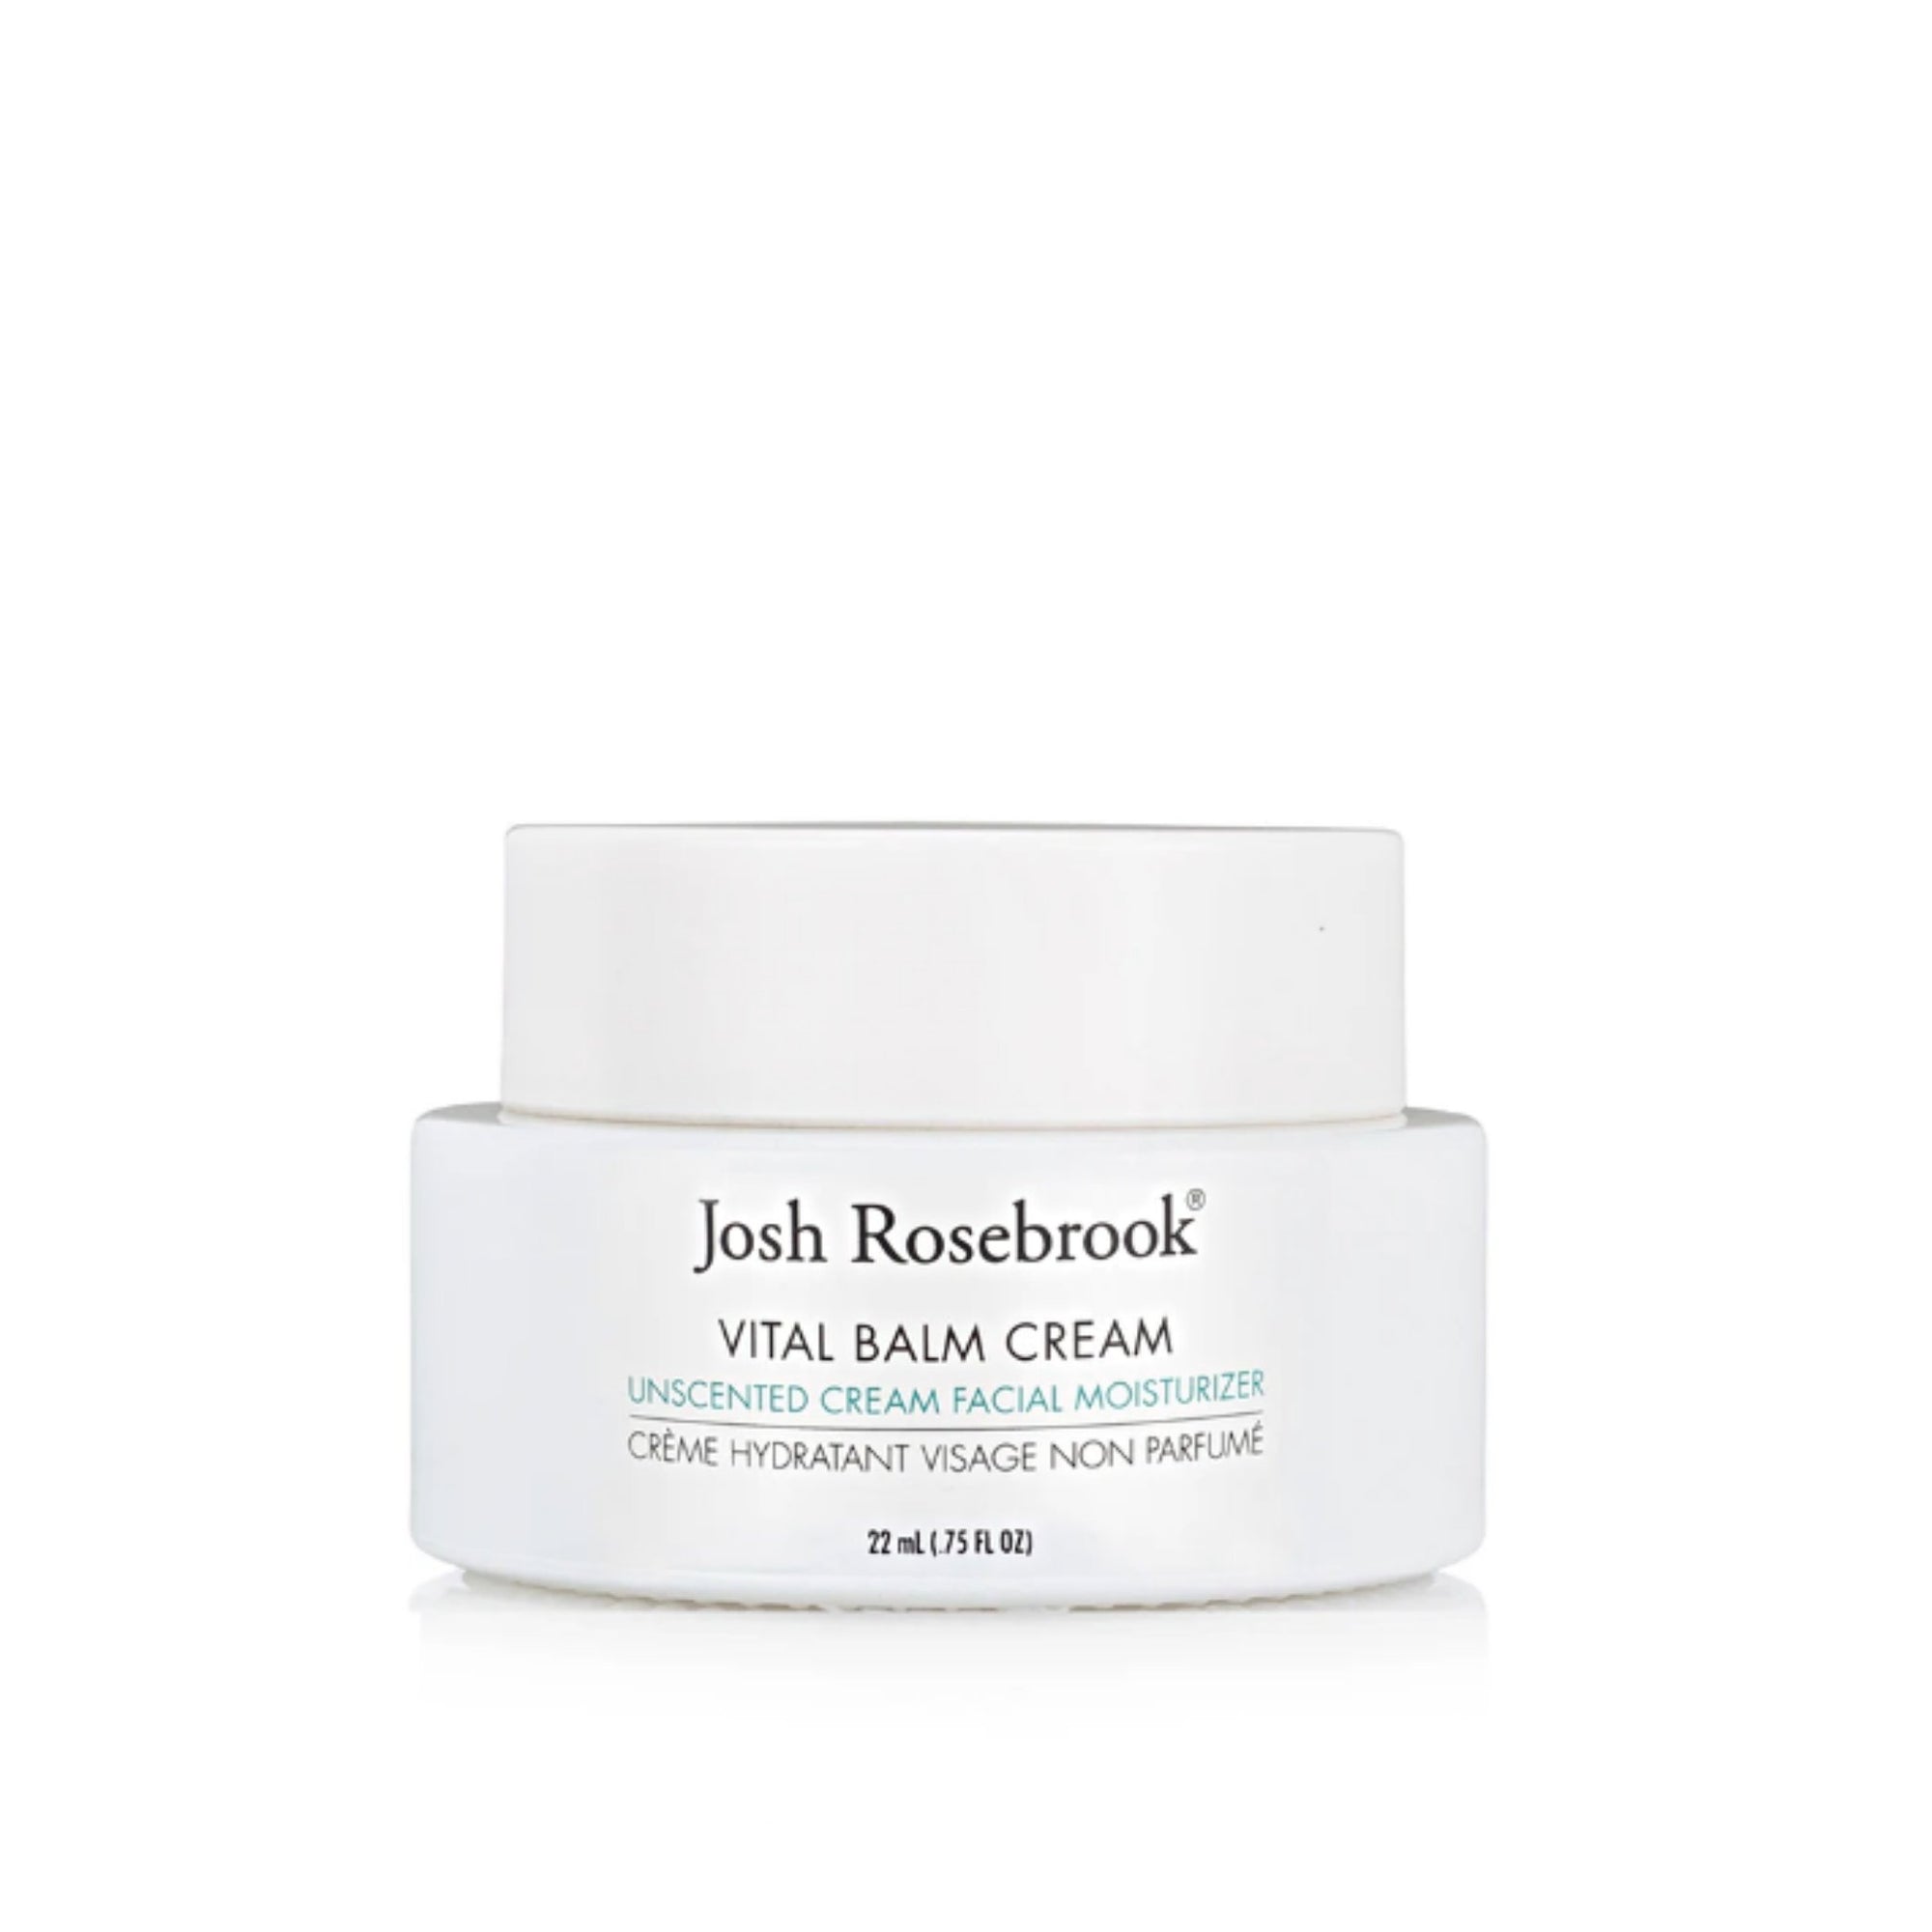 Josh Rosebrook - Josh Rosebrook Unscented Vital Balm Cream - ORESTA clean beauty simplified